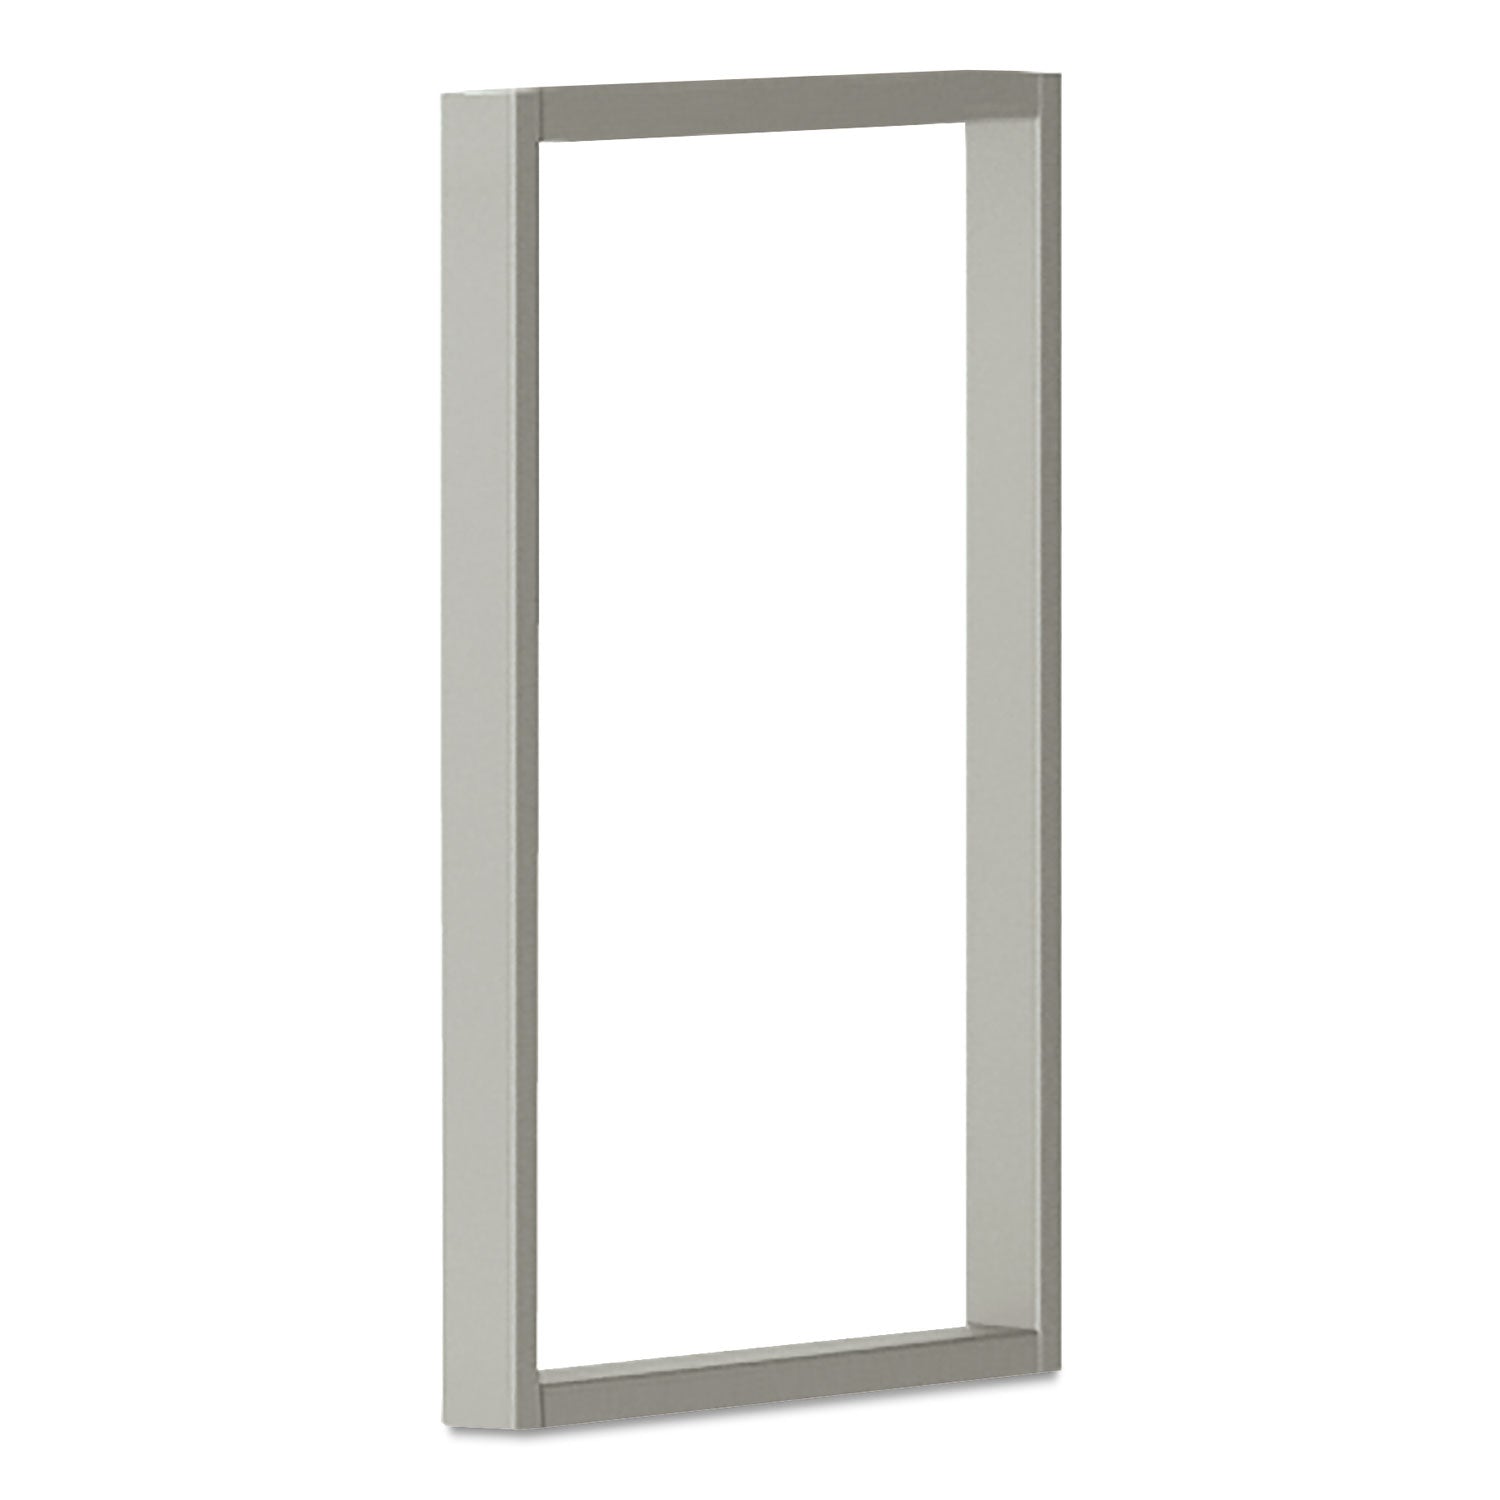 Voi O-Leg Supports for Overhead Cabinet, 14.25" x 20.5", Metallic Platinum Gray - 